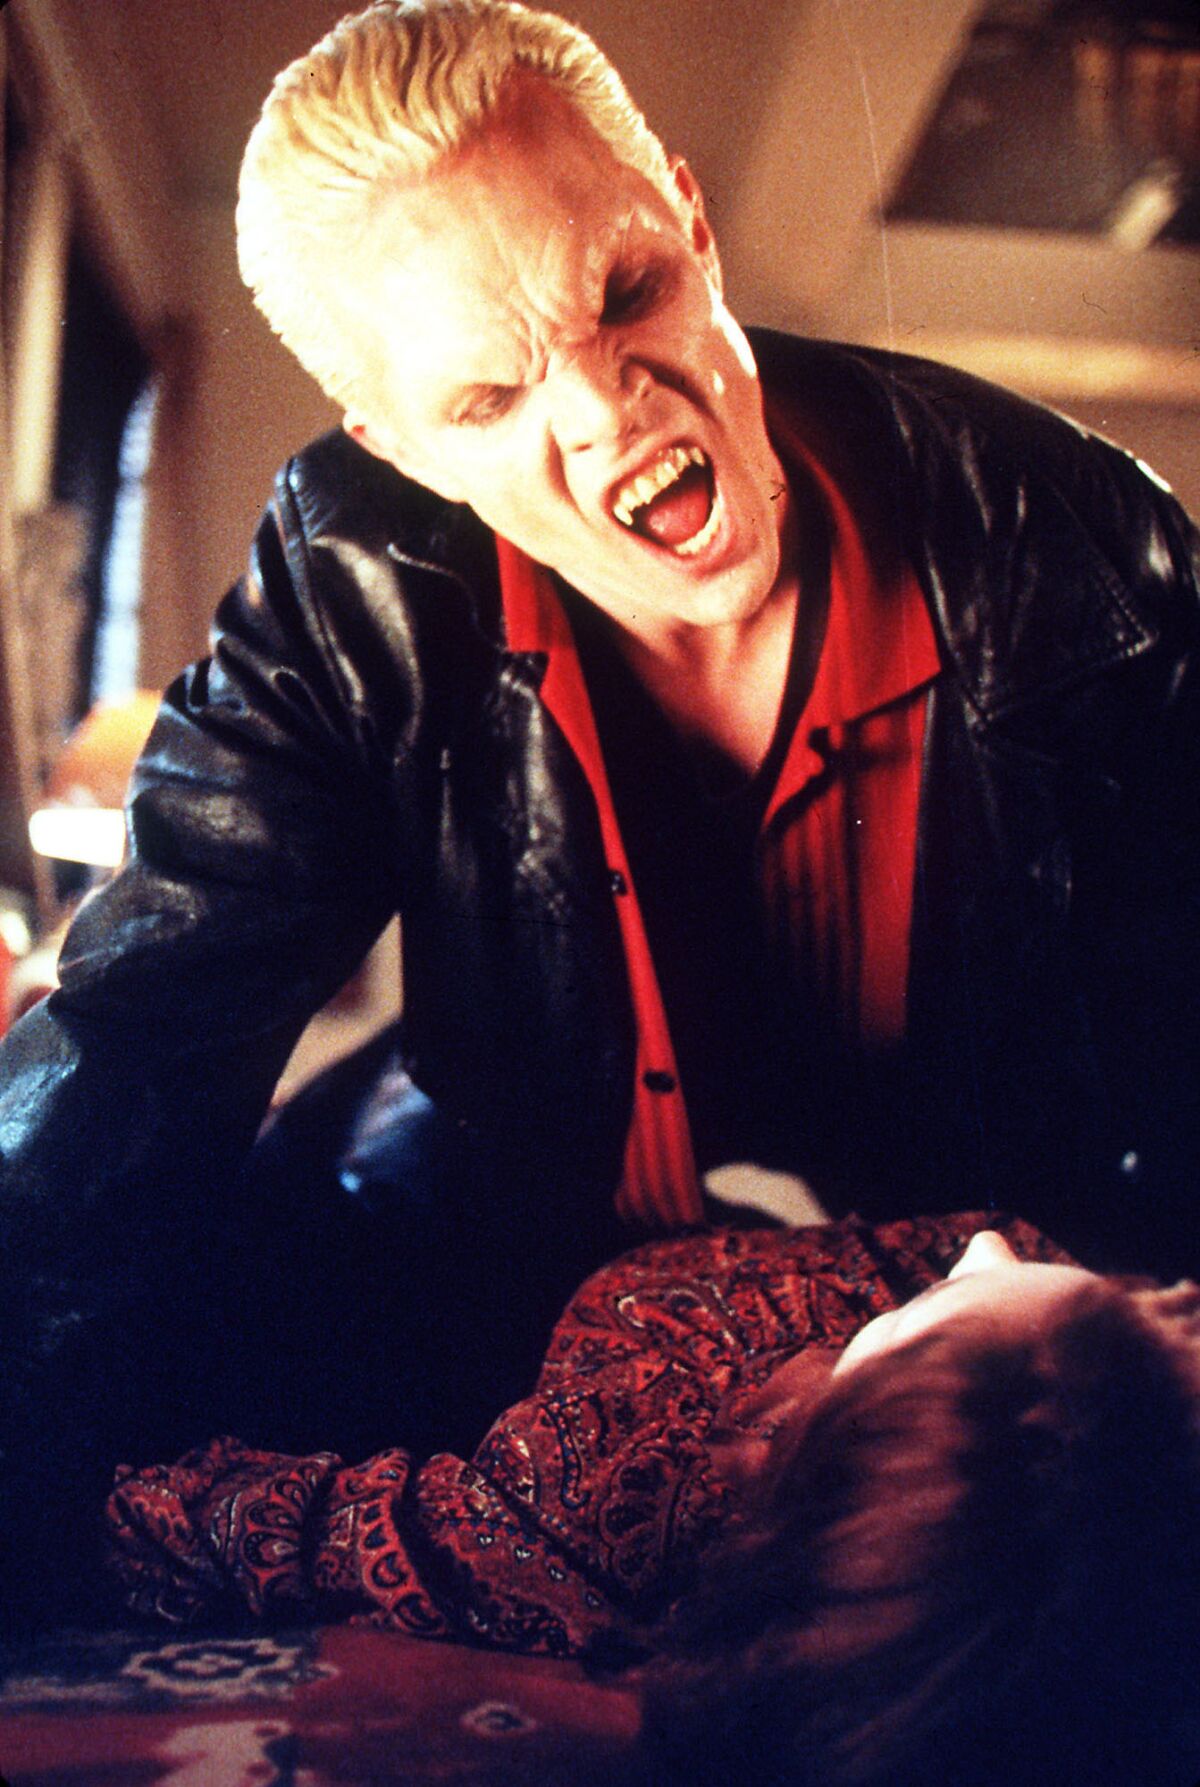 A vampire prepares to take a bite in "Buffy the Vampire Slayer"